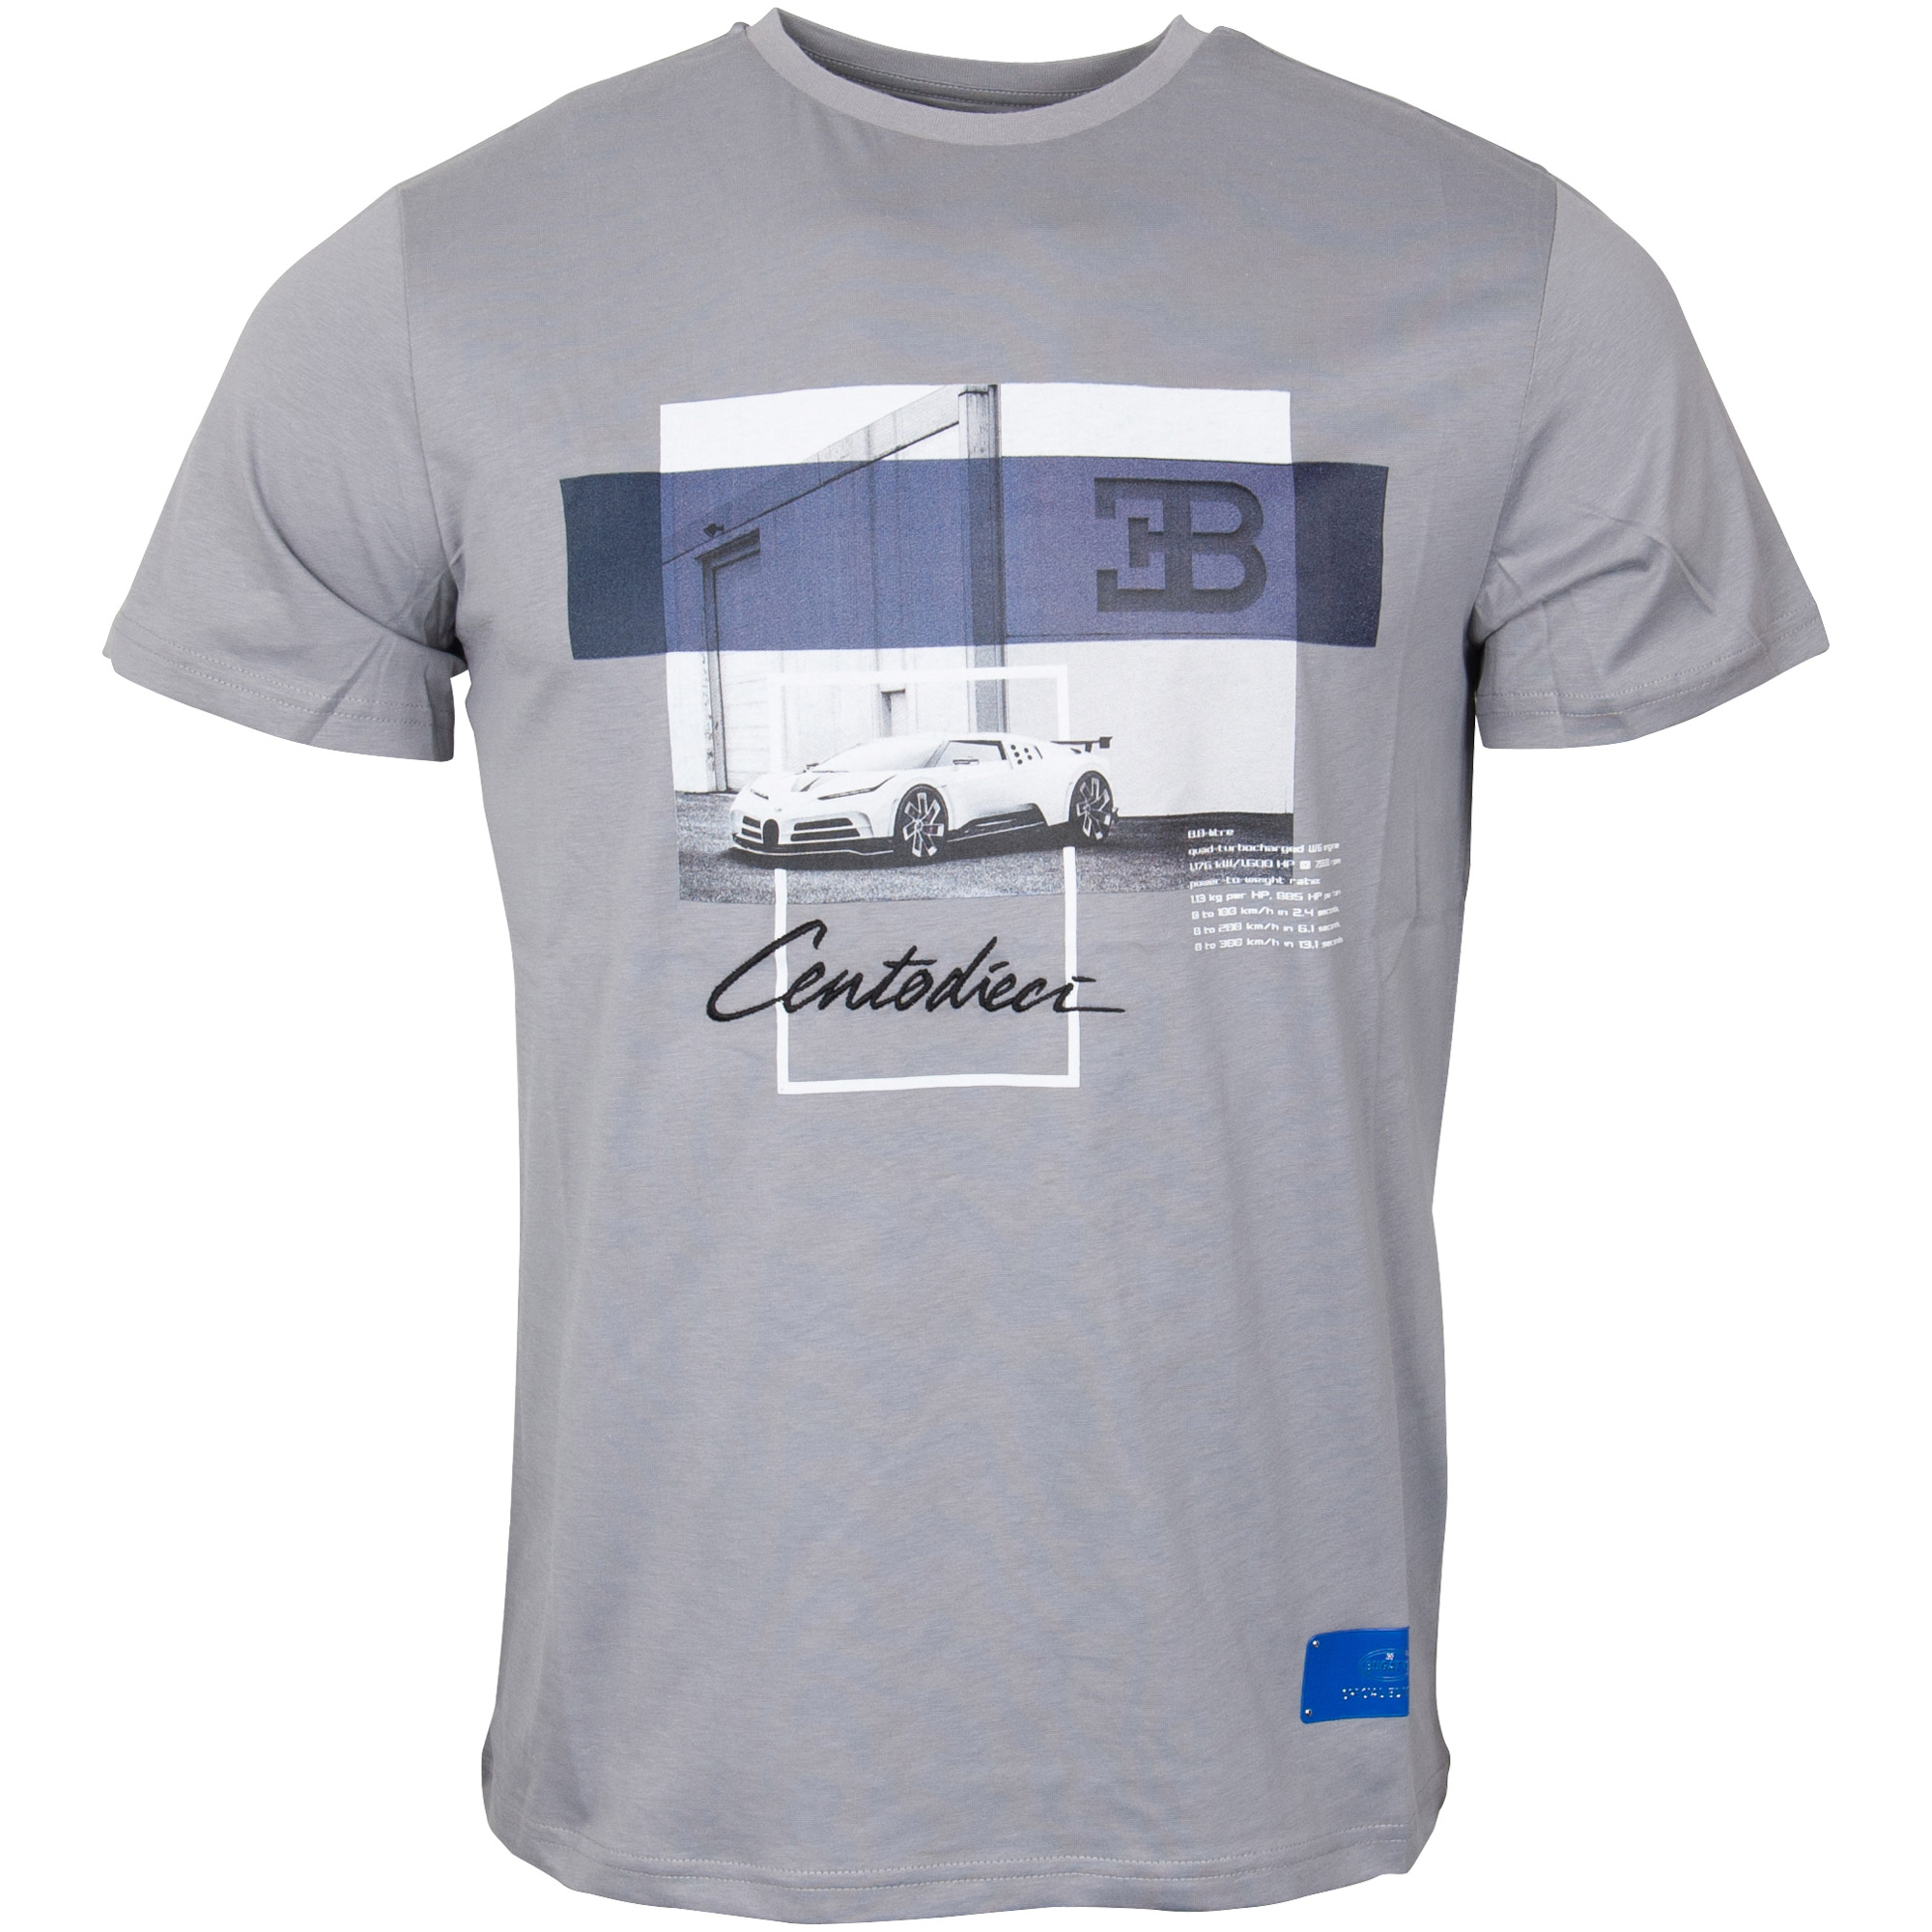 Bugatti t-shirt "Centodieci" - grey